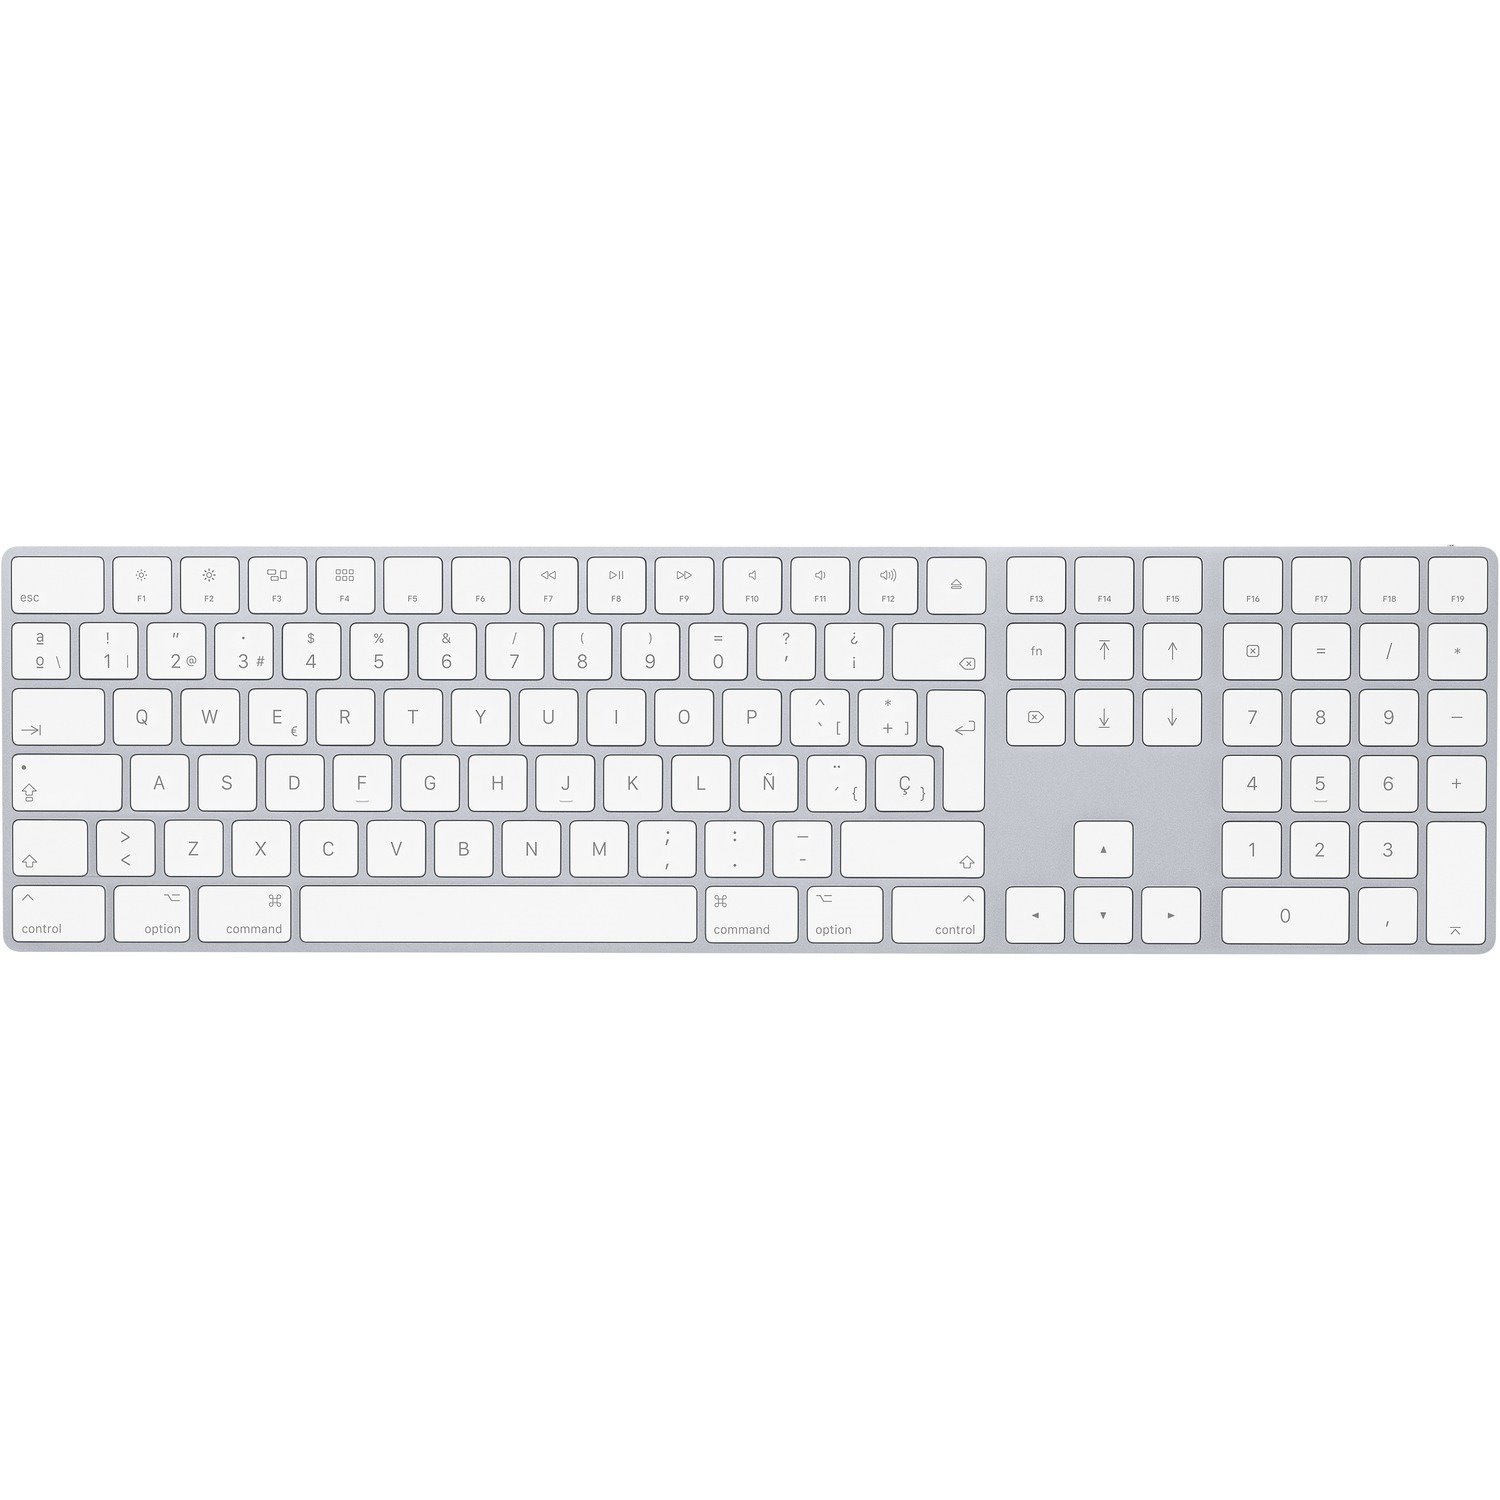 Apple Magic Keyboard - Wireless Connectivity - Spanish - Silver, White